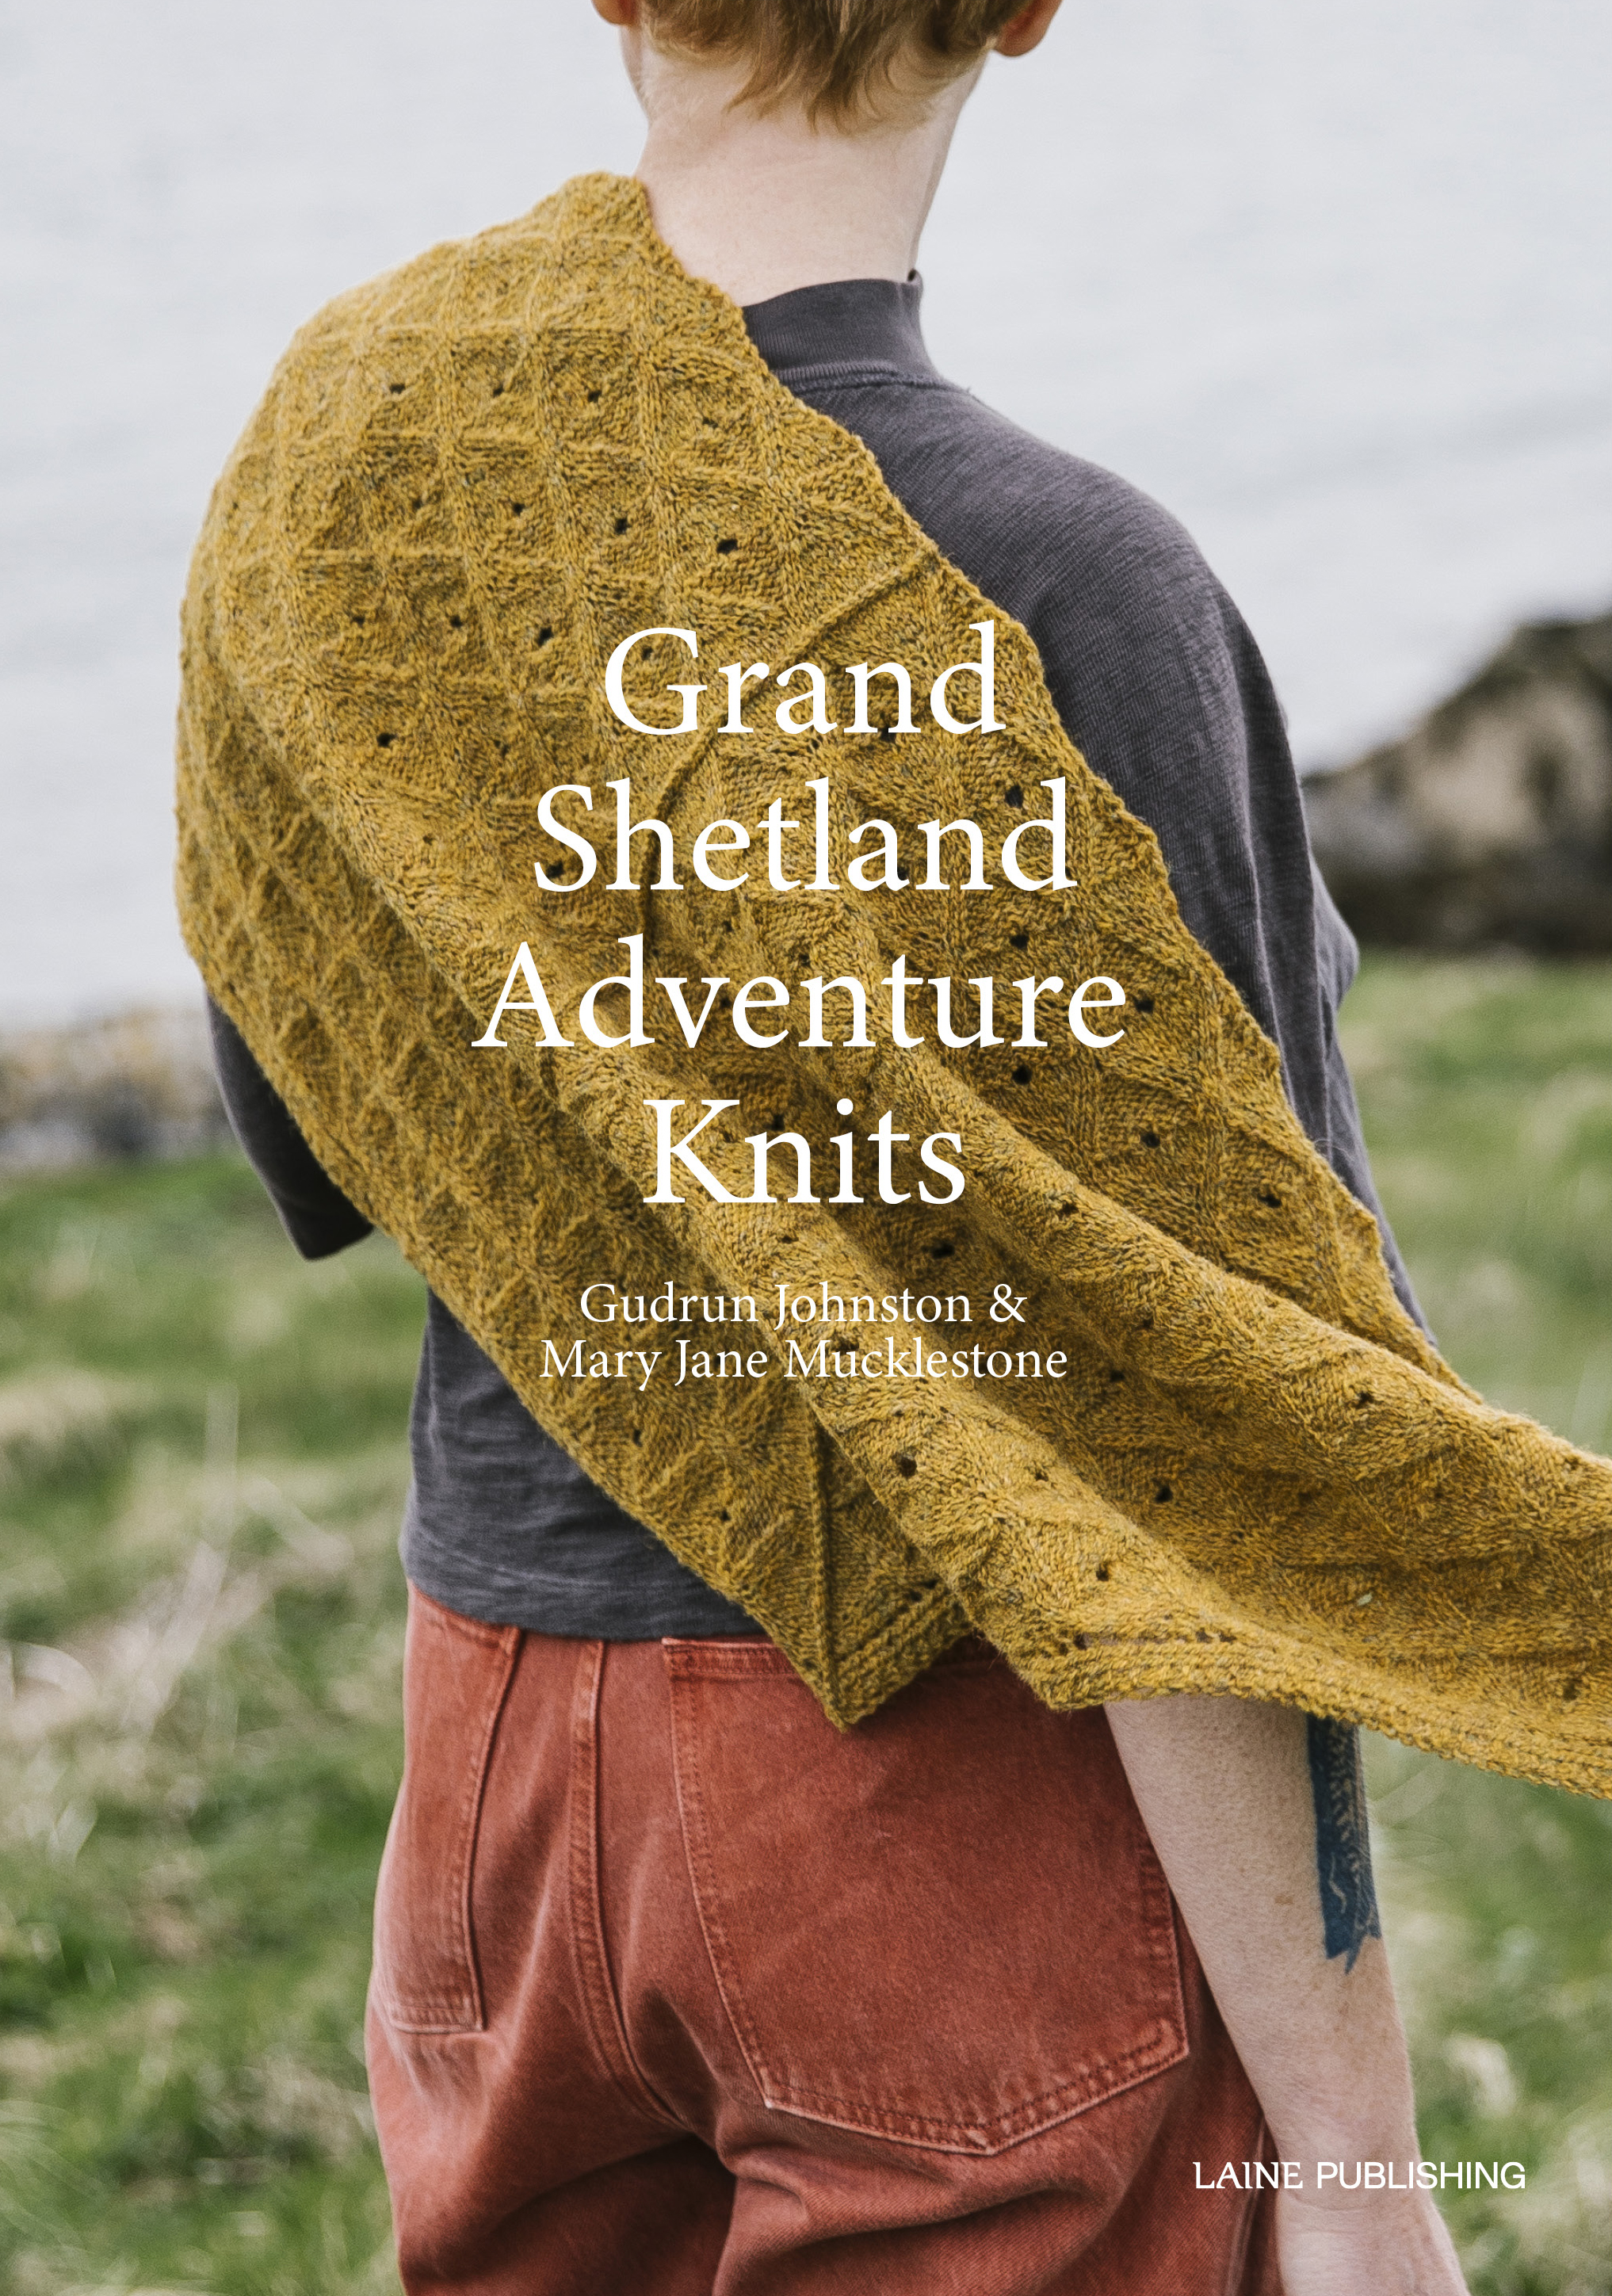 GRAND SHETLAND ADVENTURE KNITS